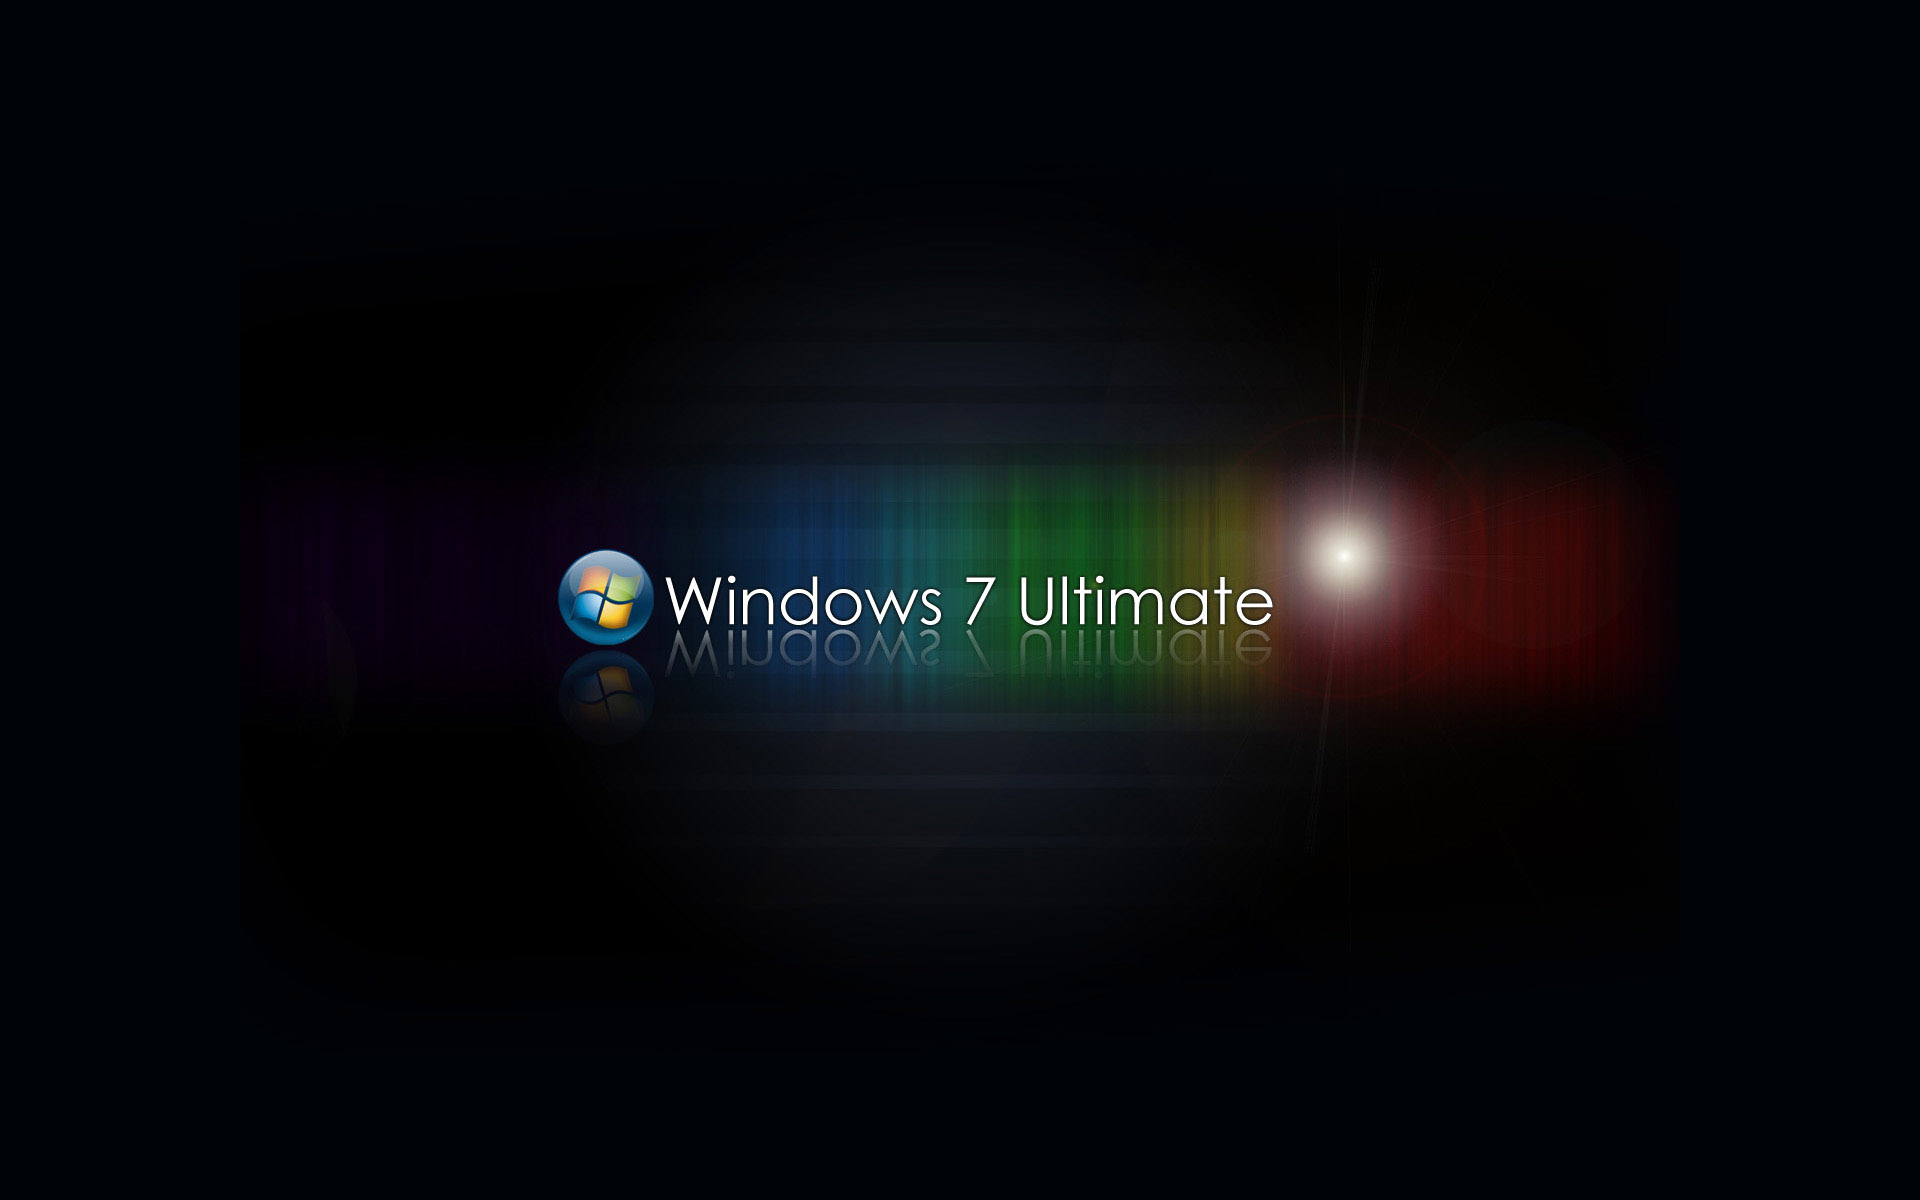 Windows 7 Ultimate Ultrawide Wallpapers